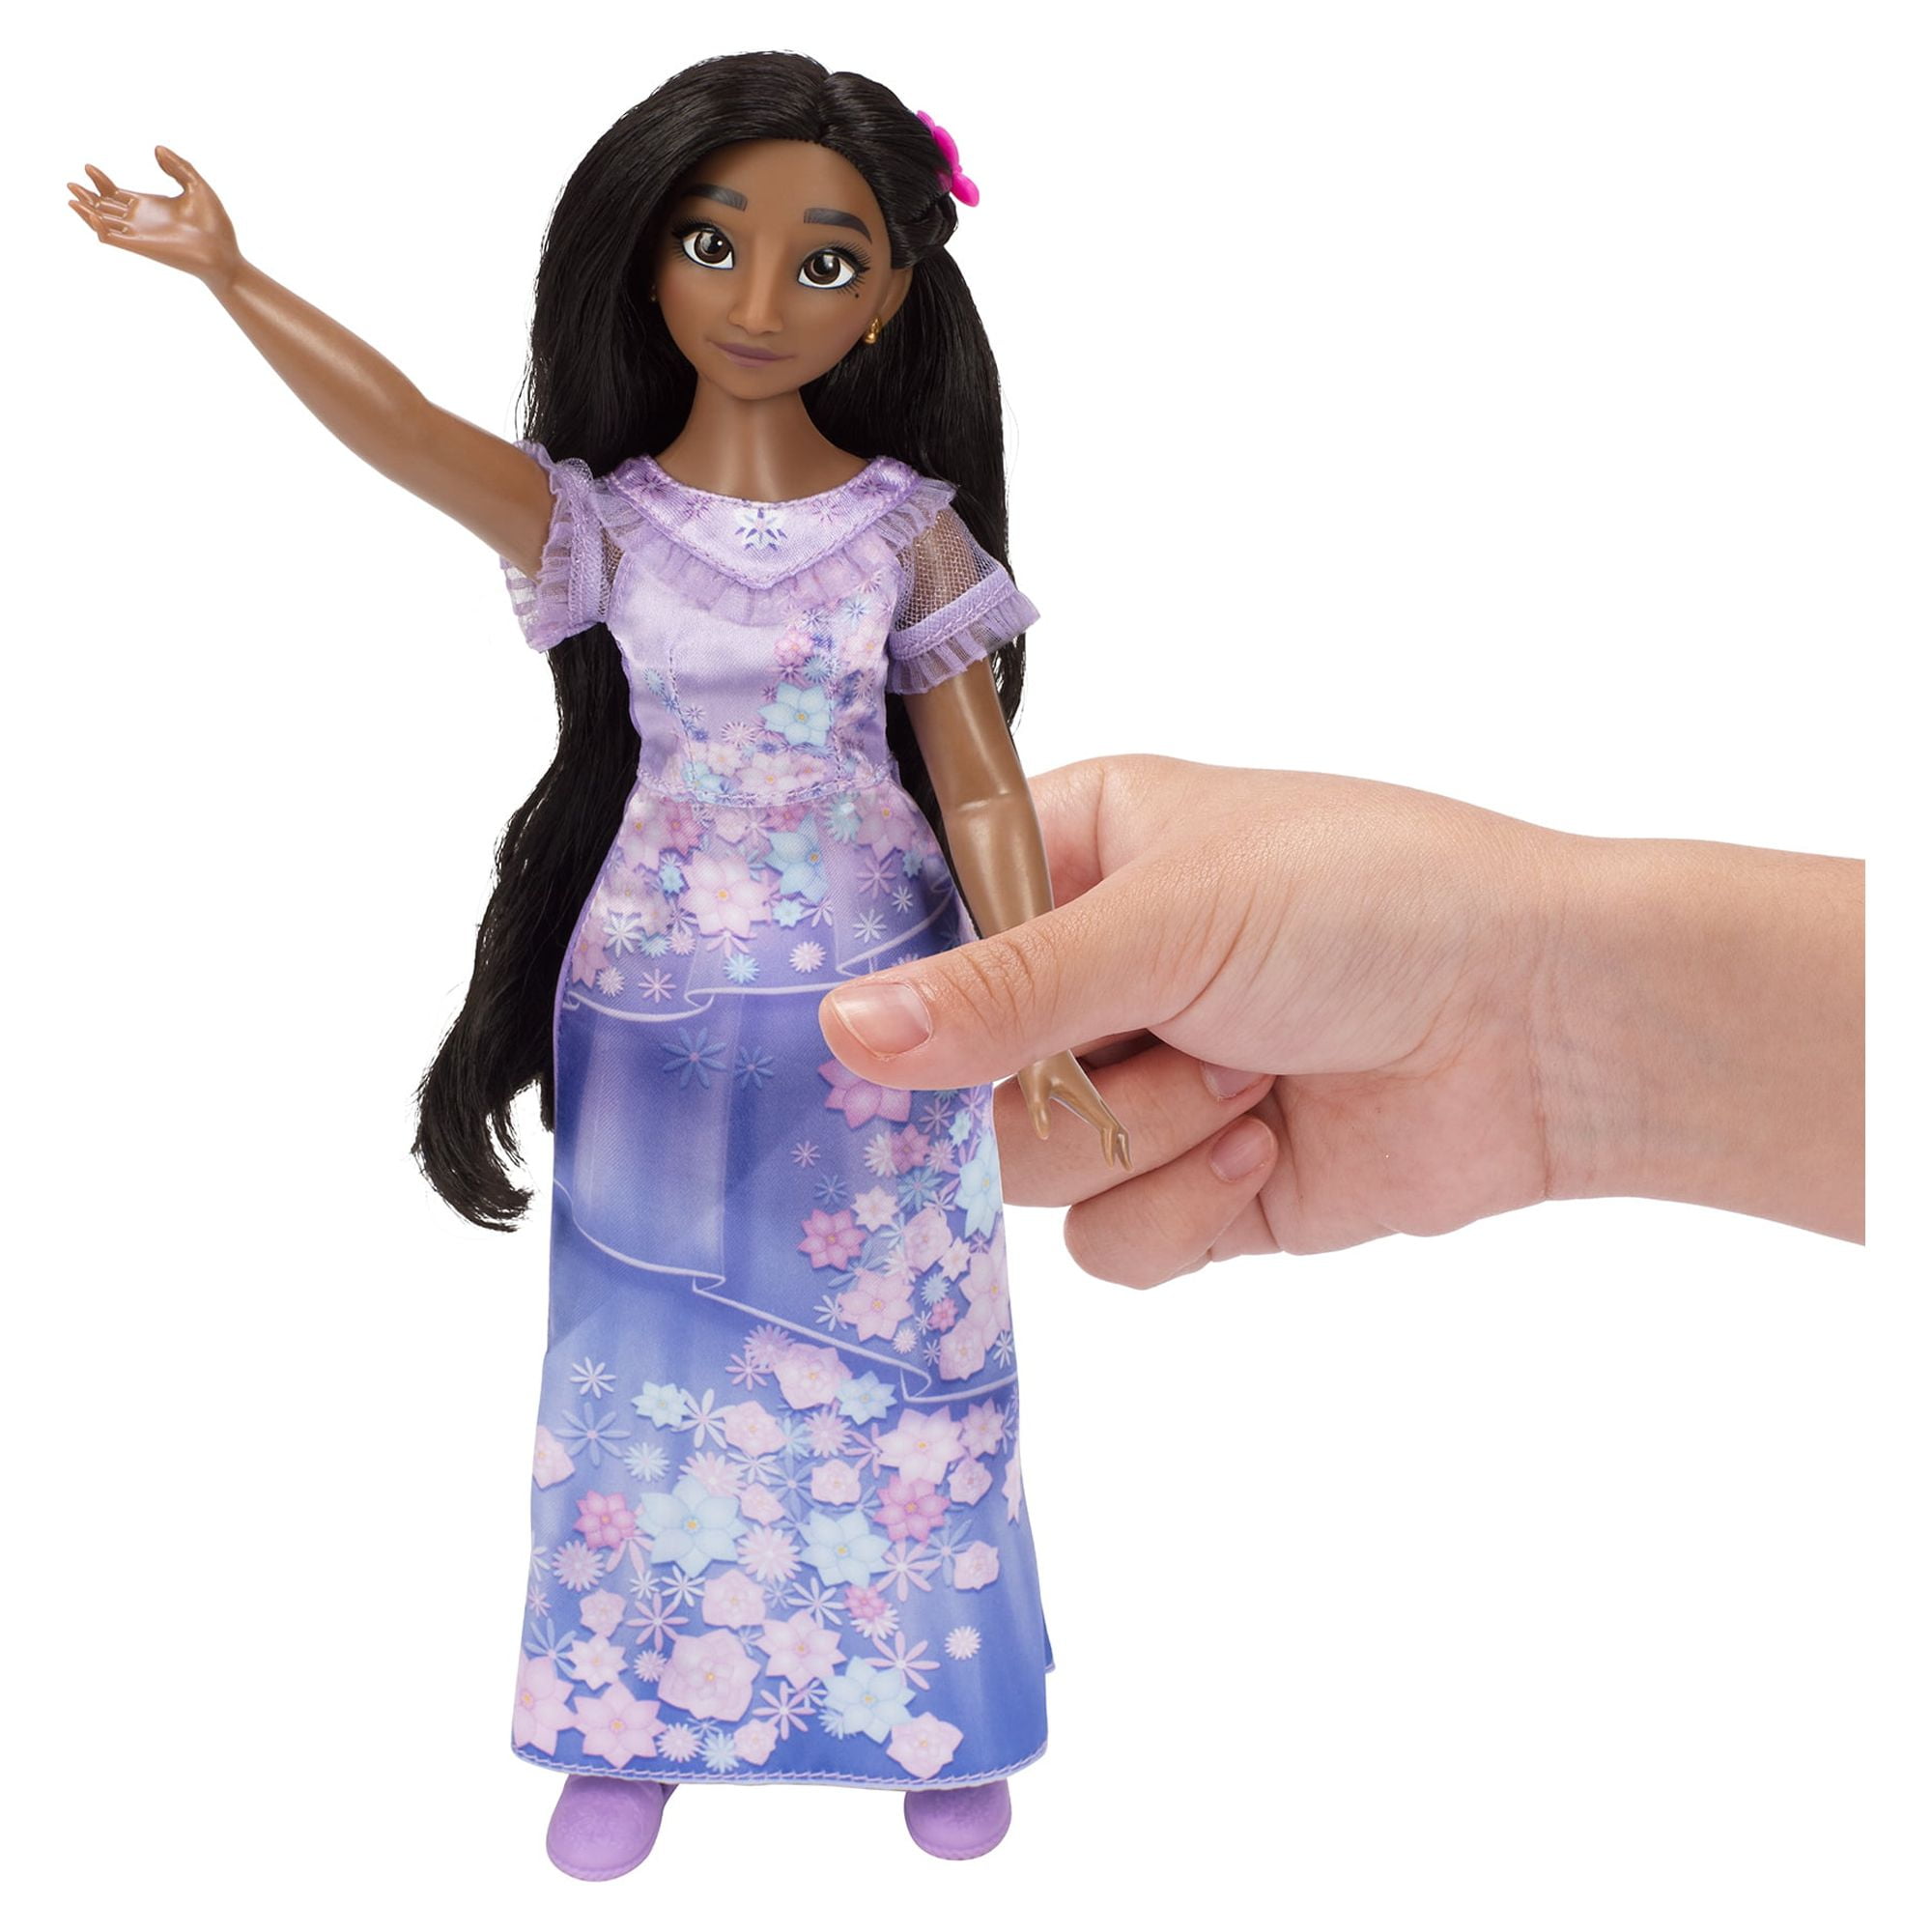 Disney Encanto Isabela doll & Vanity Toys R Us exclusive